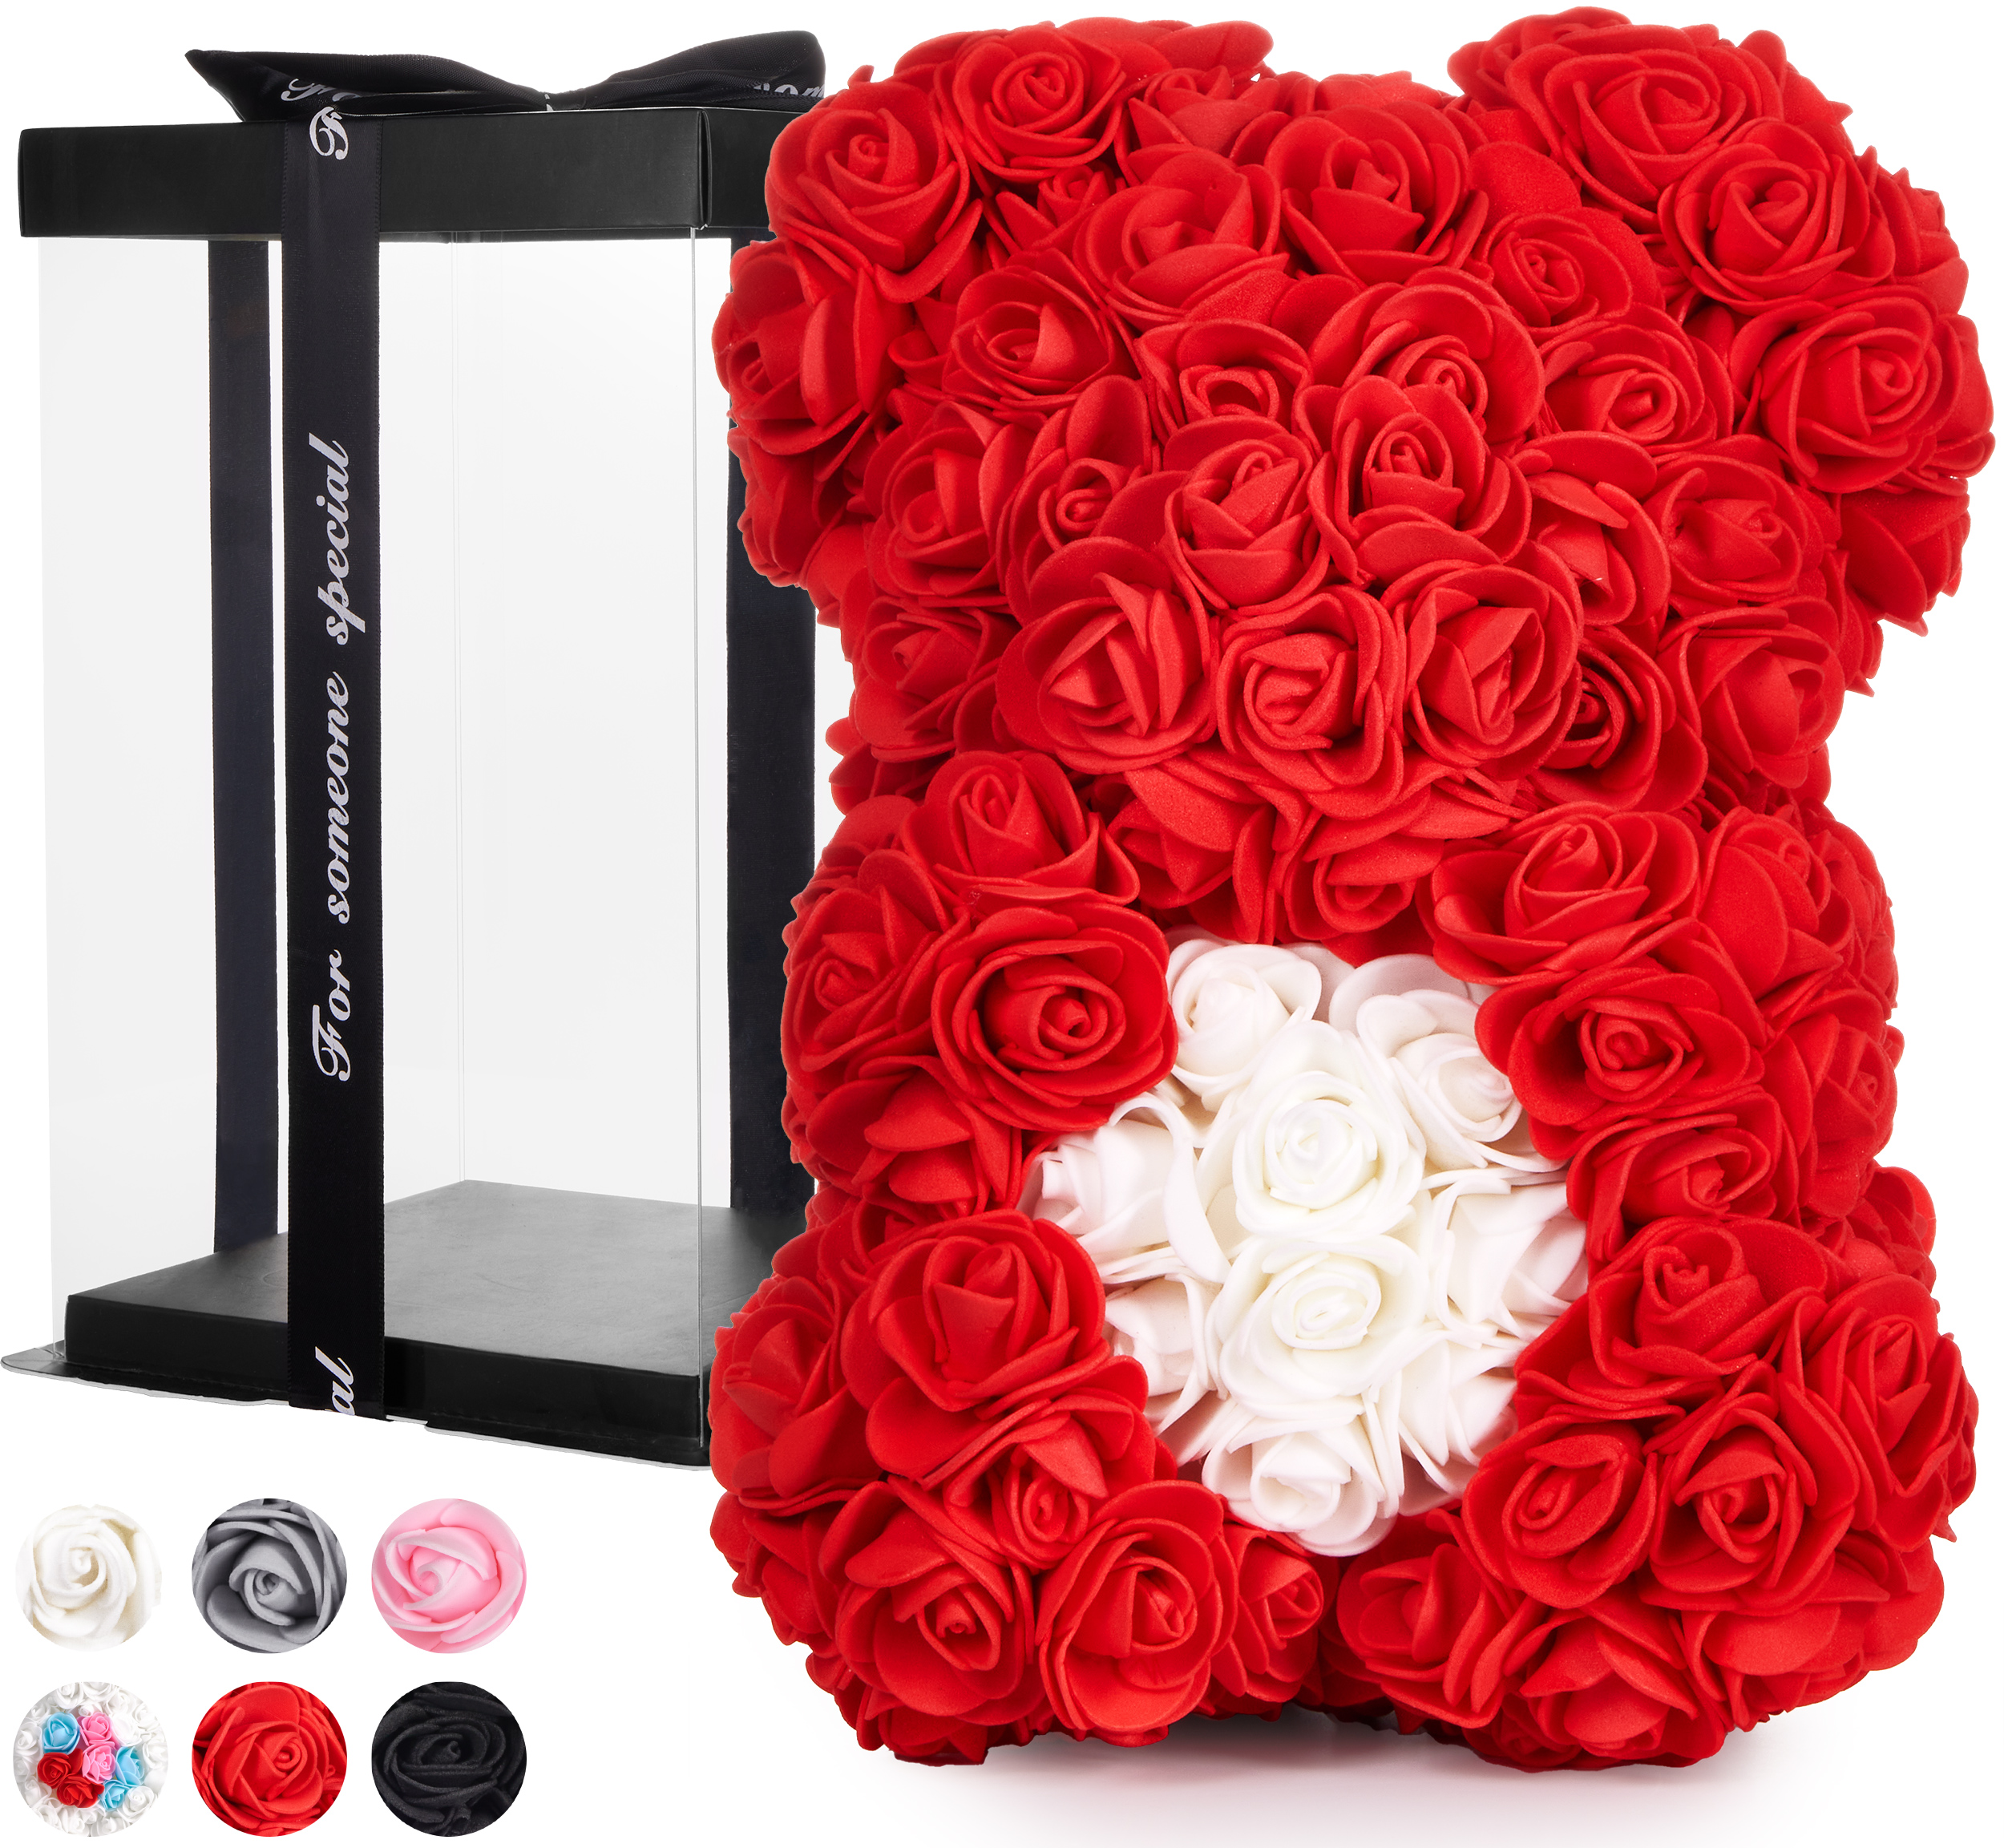 25cm Teddybär Hochzeit Rosenbär Romantic Valentinstag Rose Craft mit Geschenkbox 